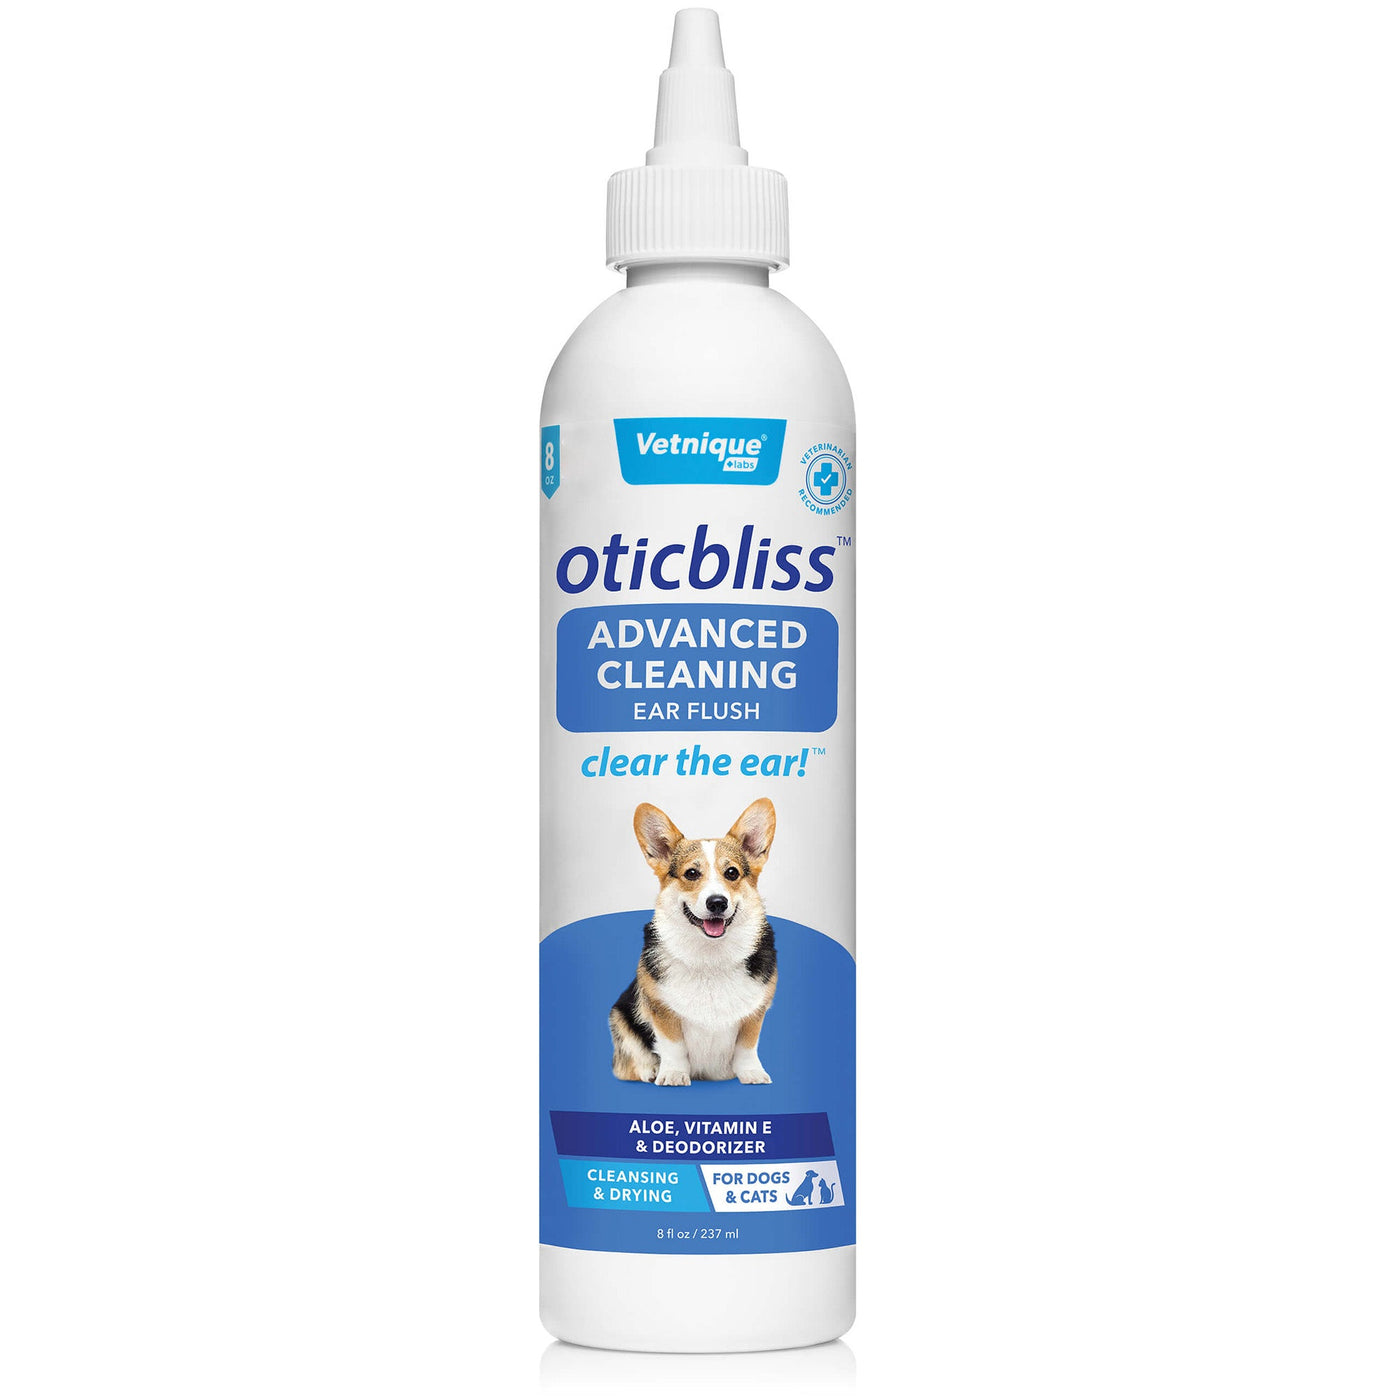 Oticbliss Advanced Cleaning Ear Flush